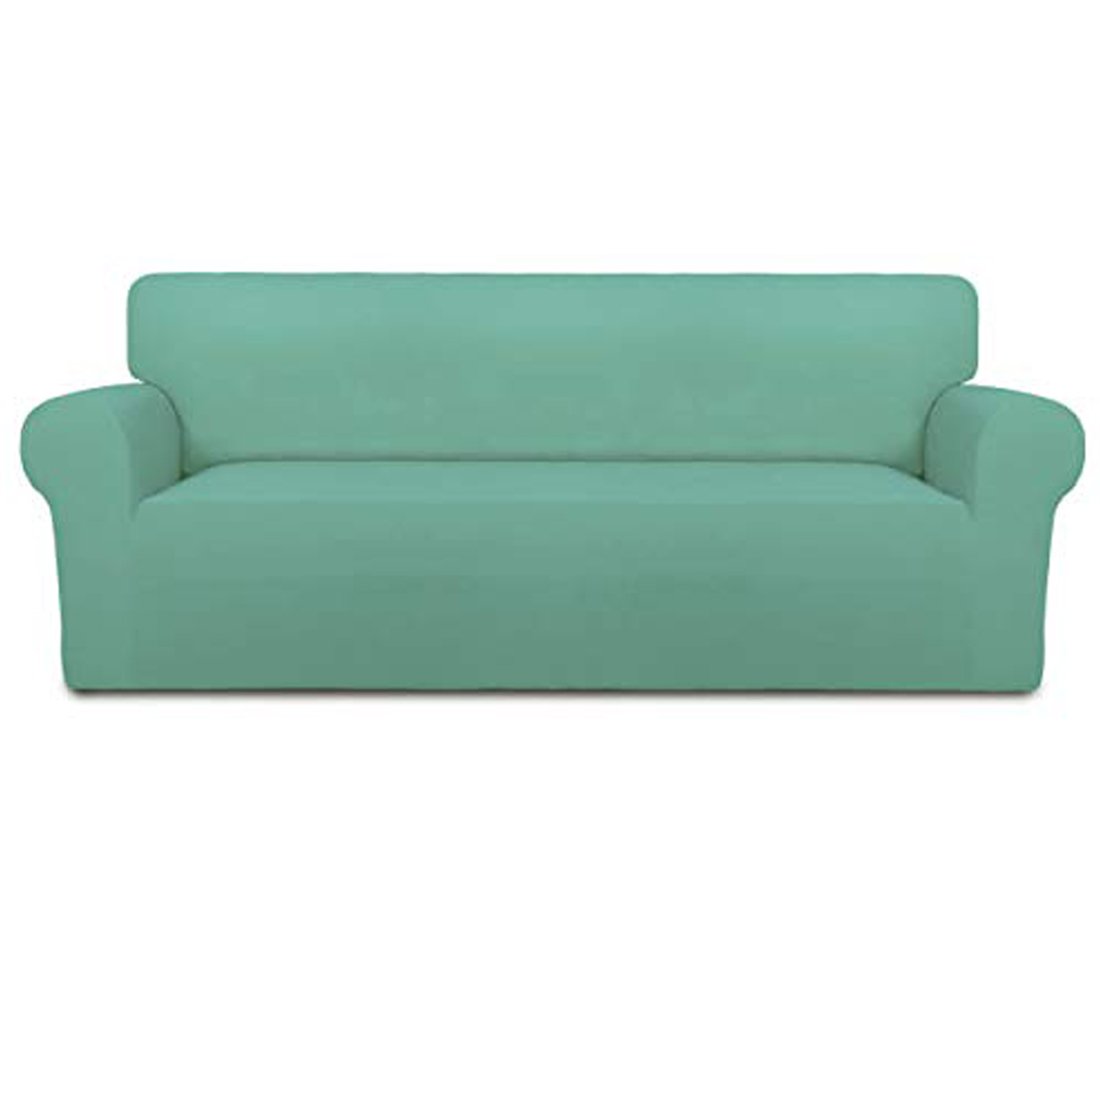 Sofa Slipcover - Pastel Green